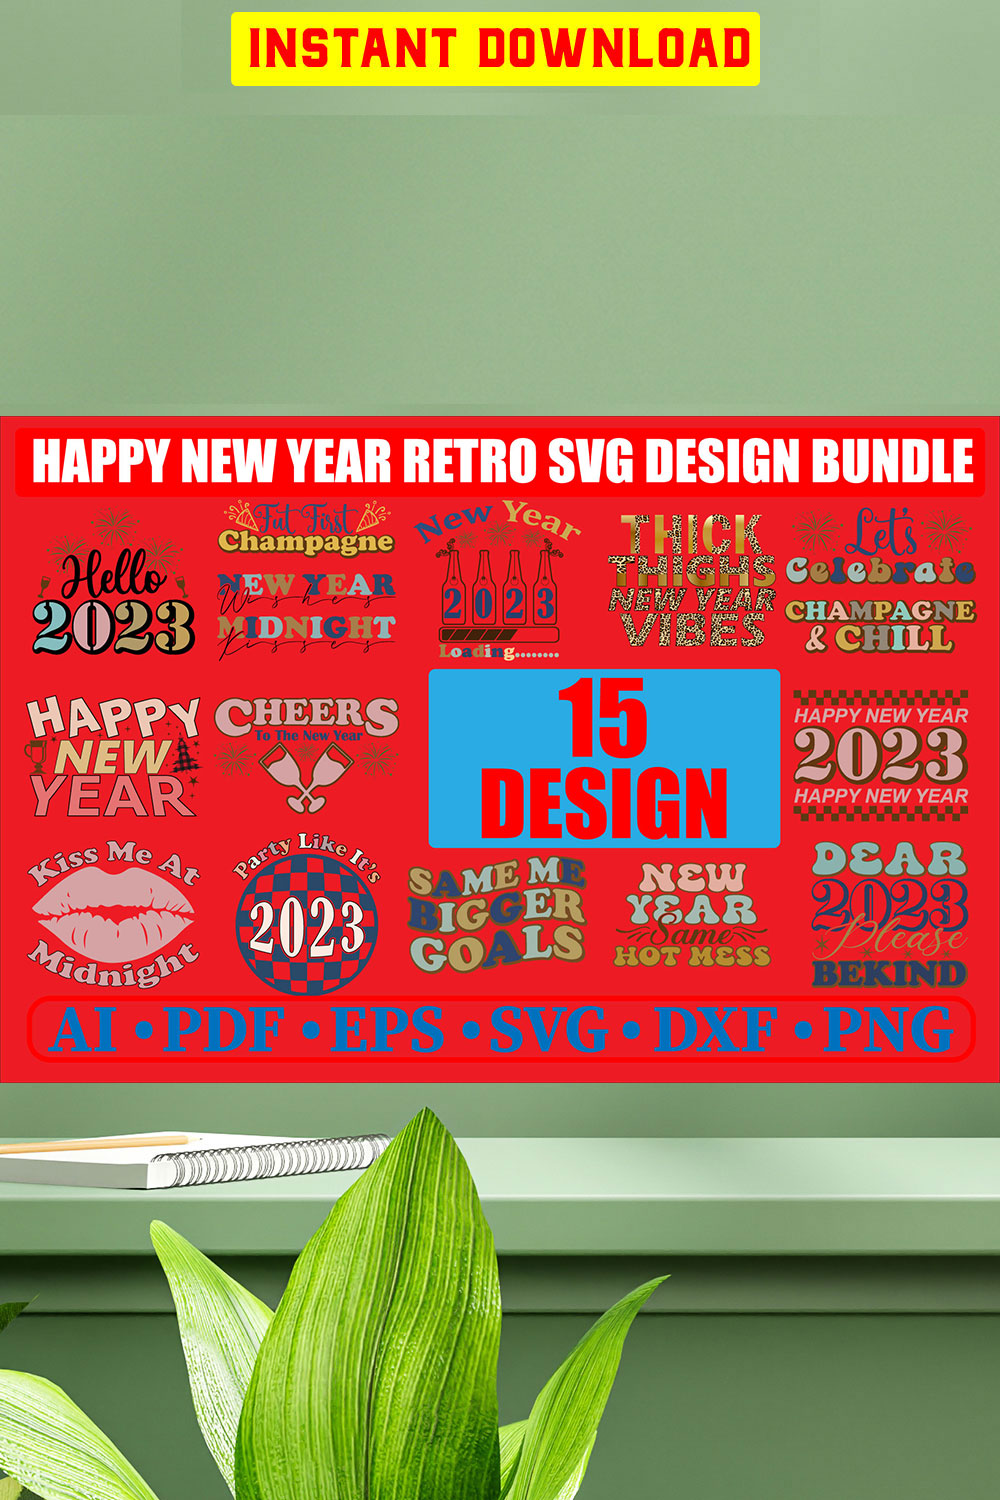 Happy New Year Retro SVG Designs Bundle pinterest preview image.